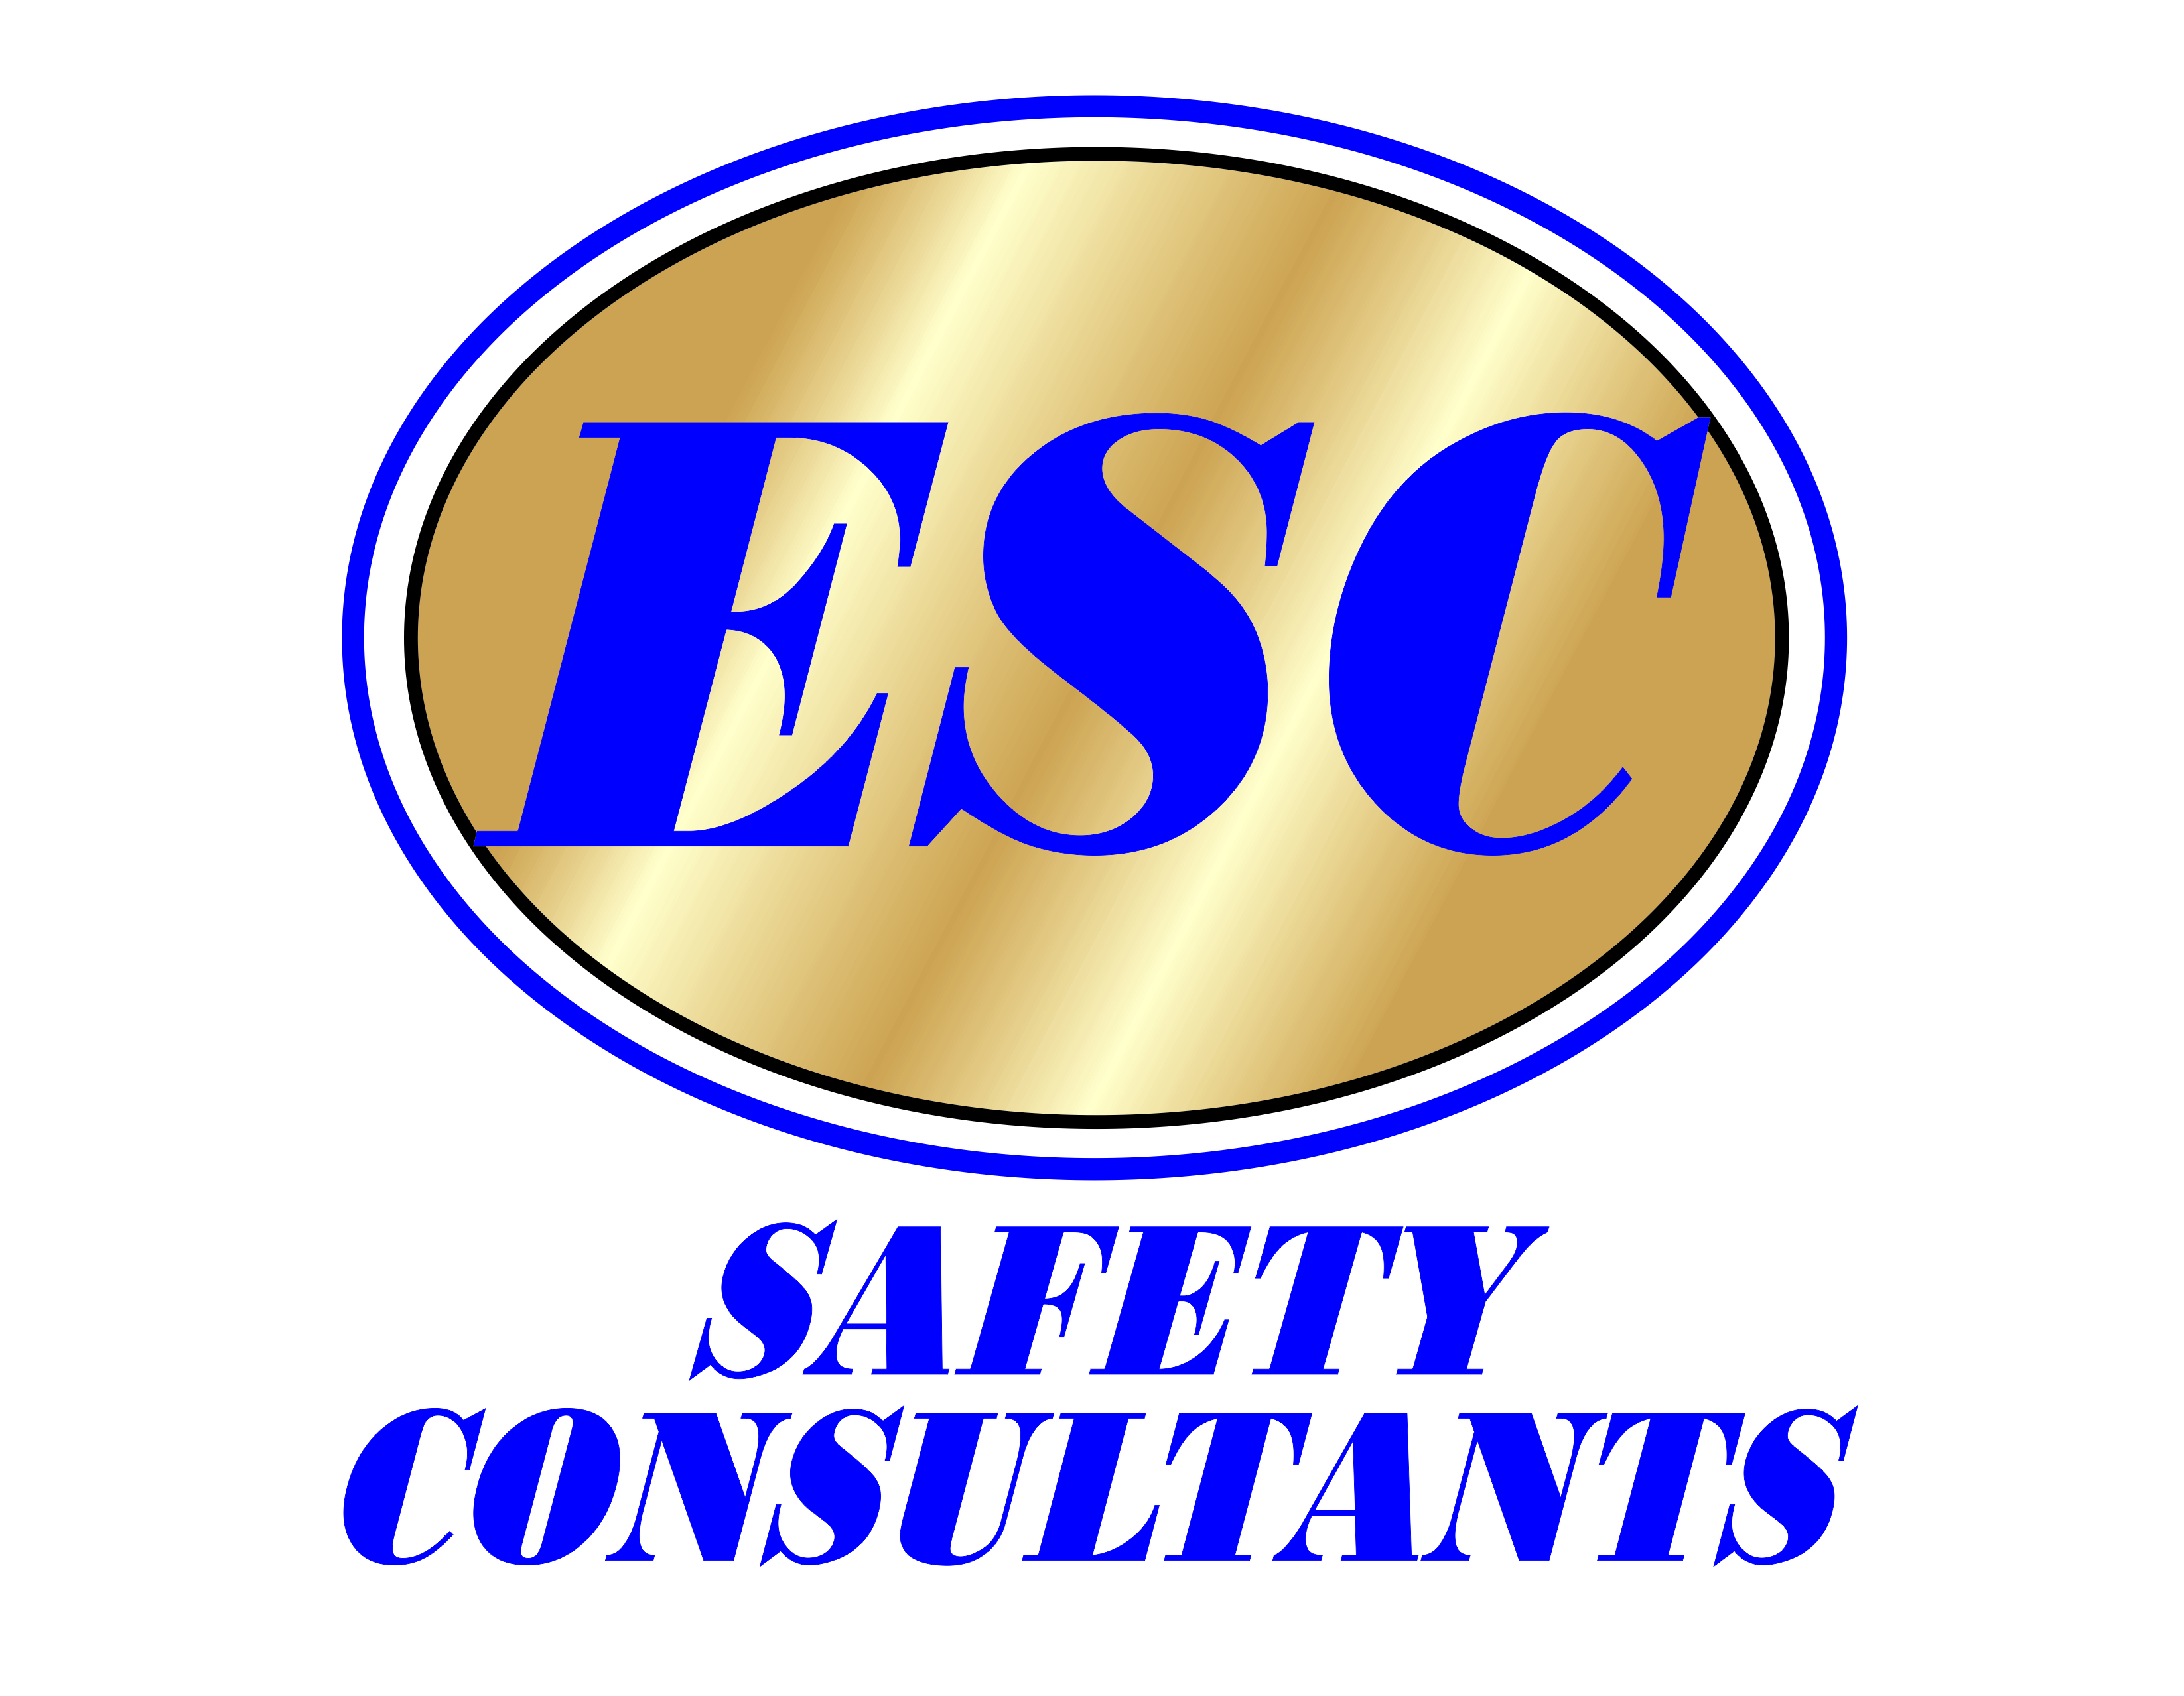 ESC Safety Consultants square 1